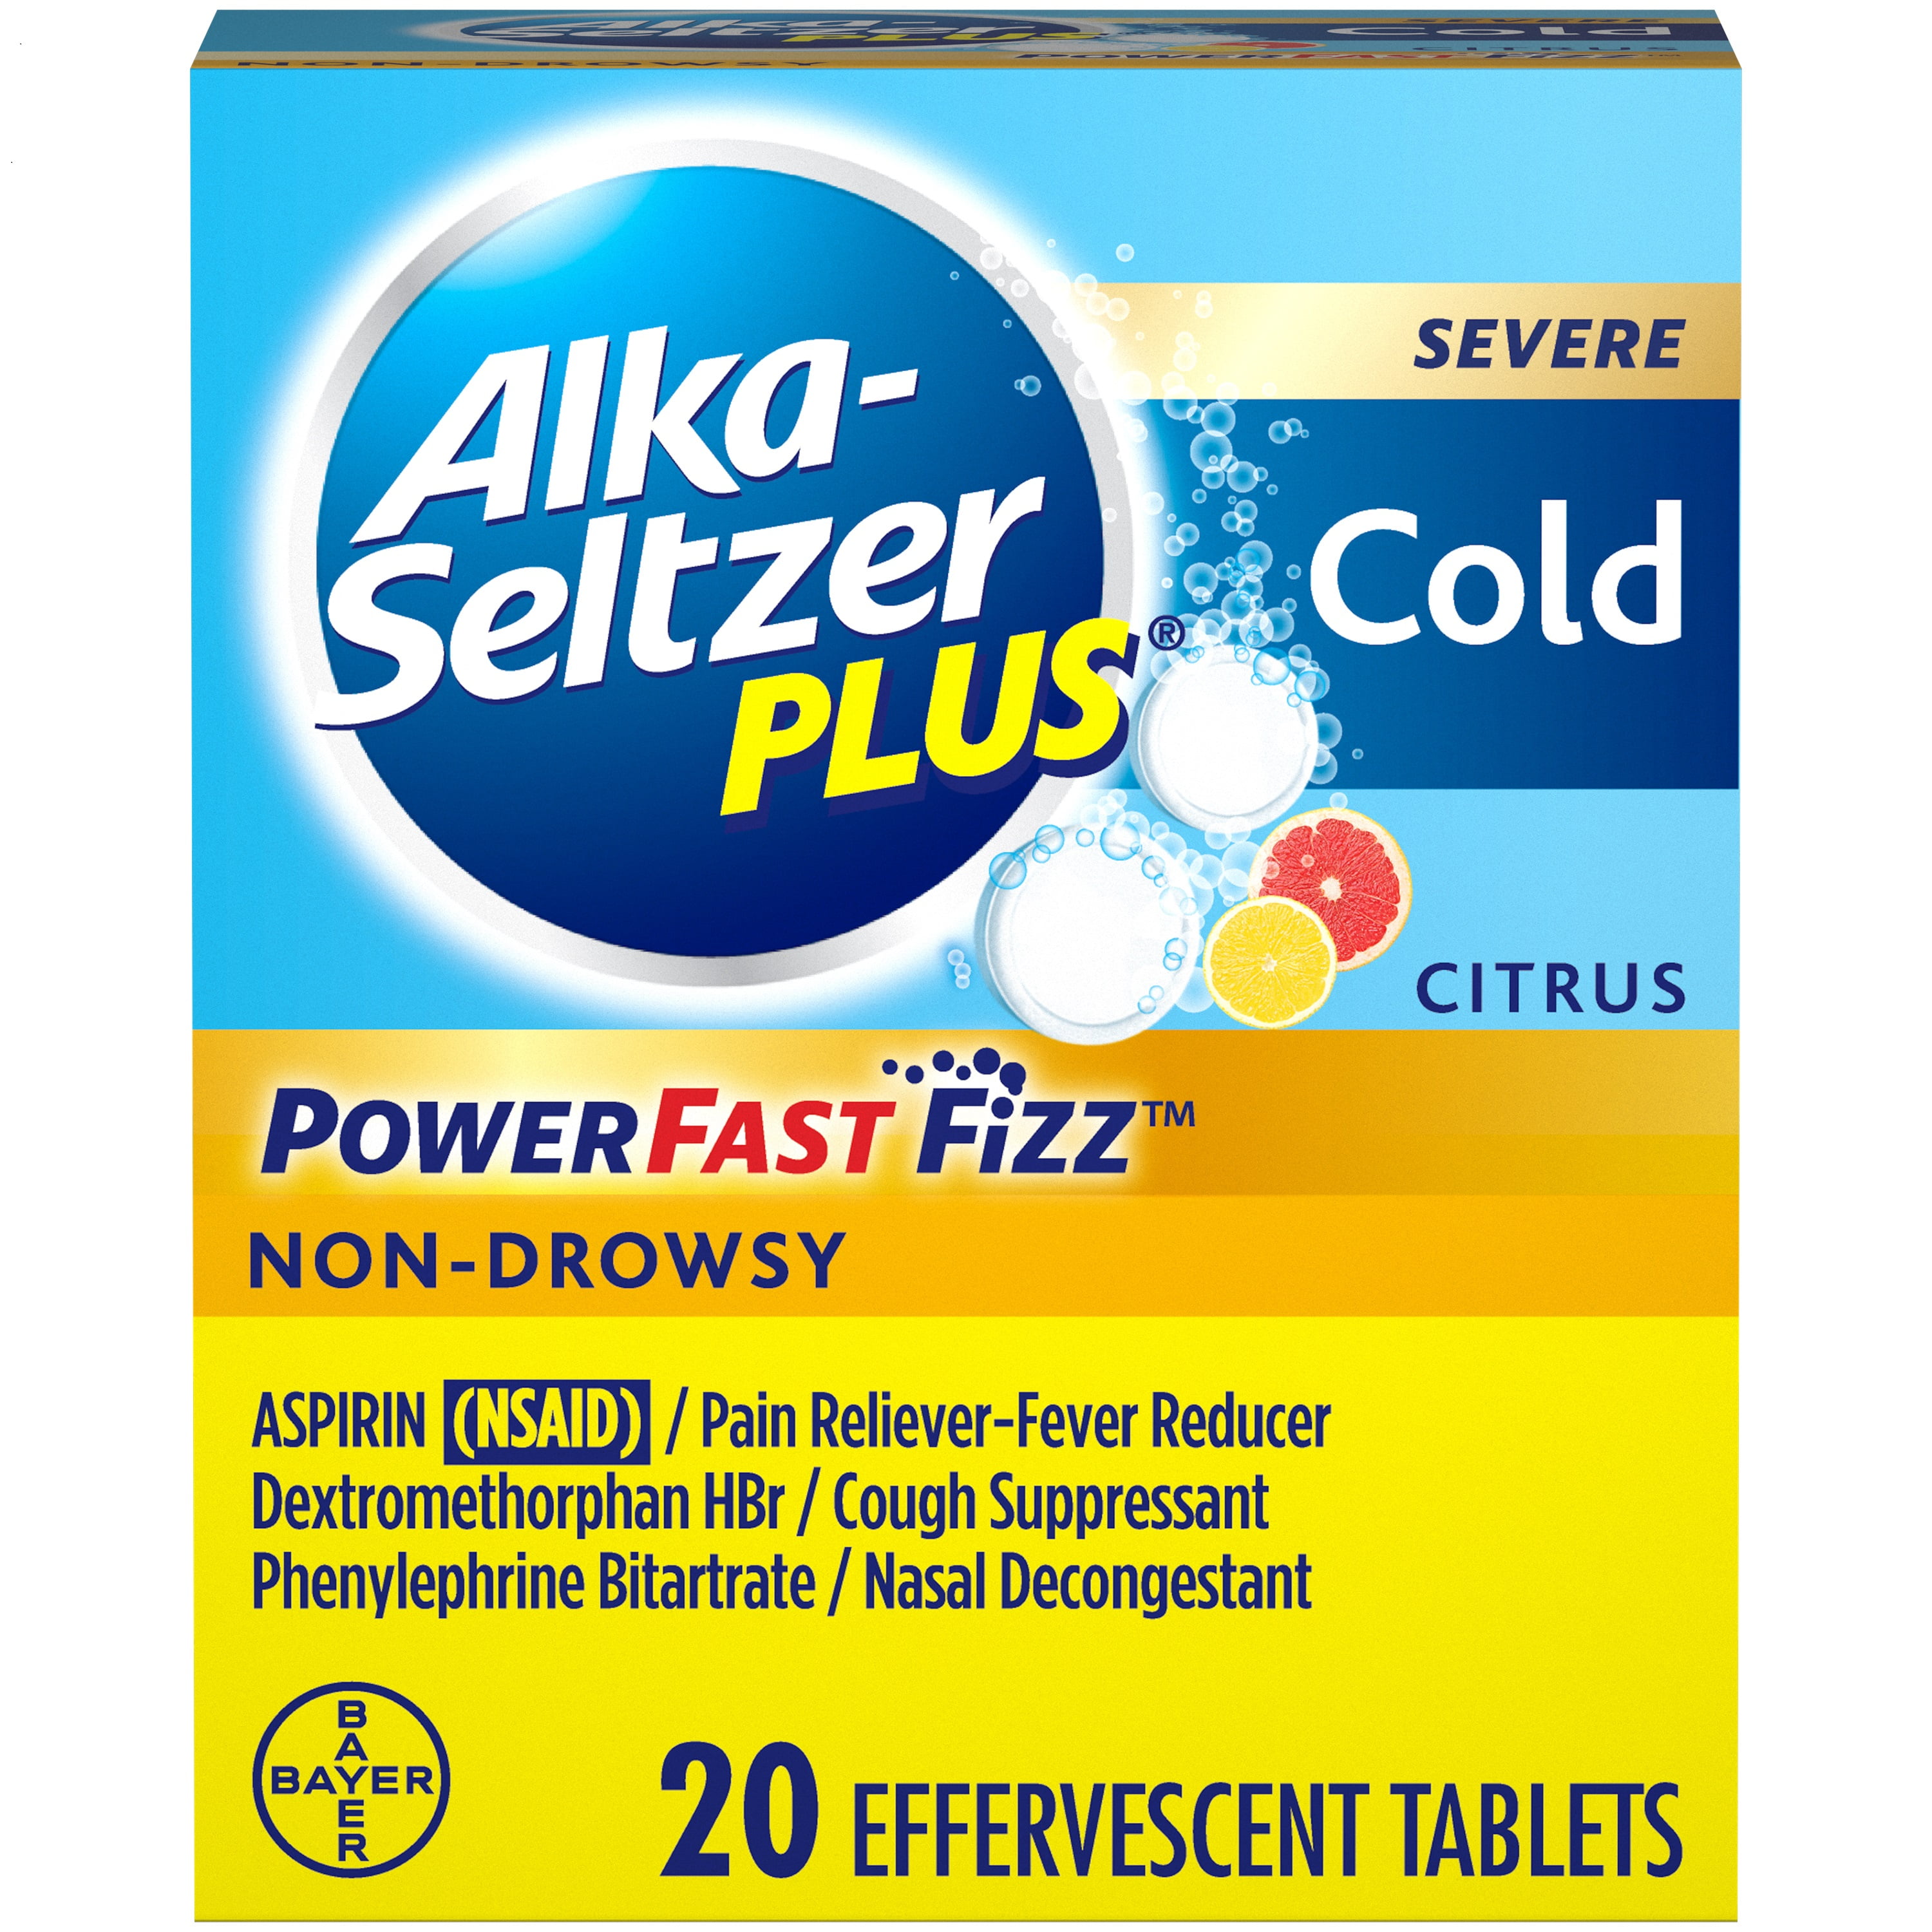 Alka-Seltzer Plus Severe Non-Drowsy Cold PowerFast Fizz Citrus Effervescent Tablets 20ct